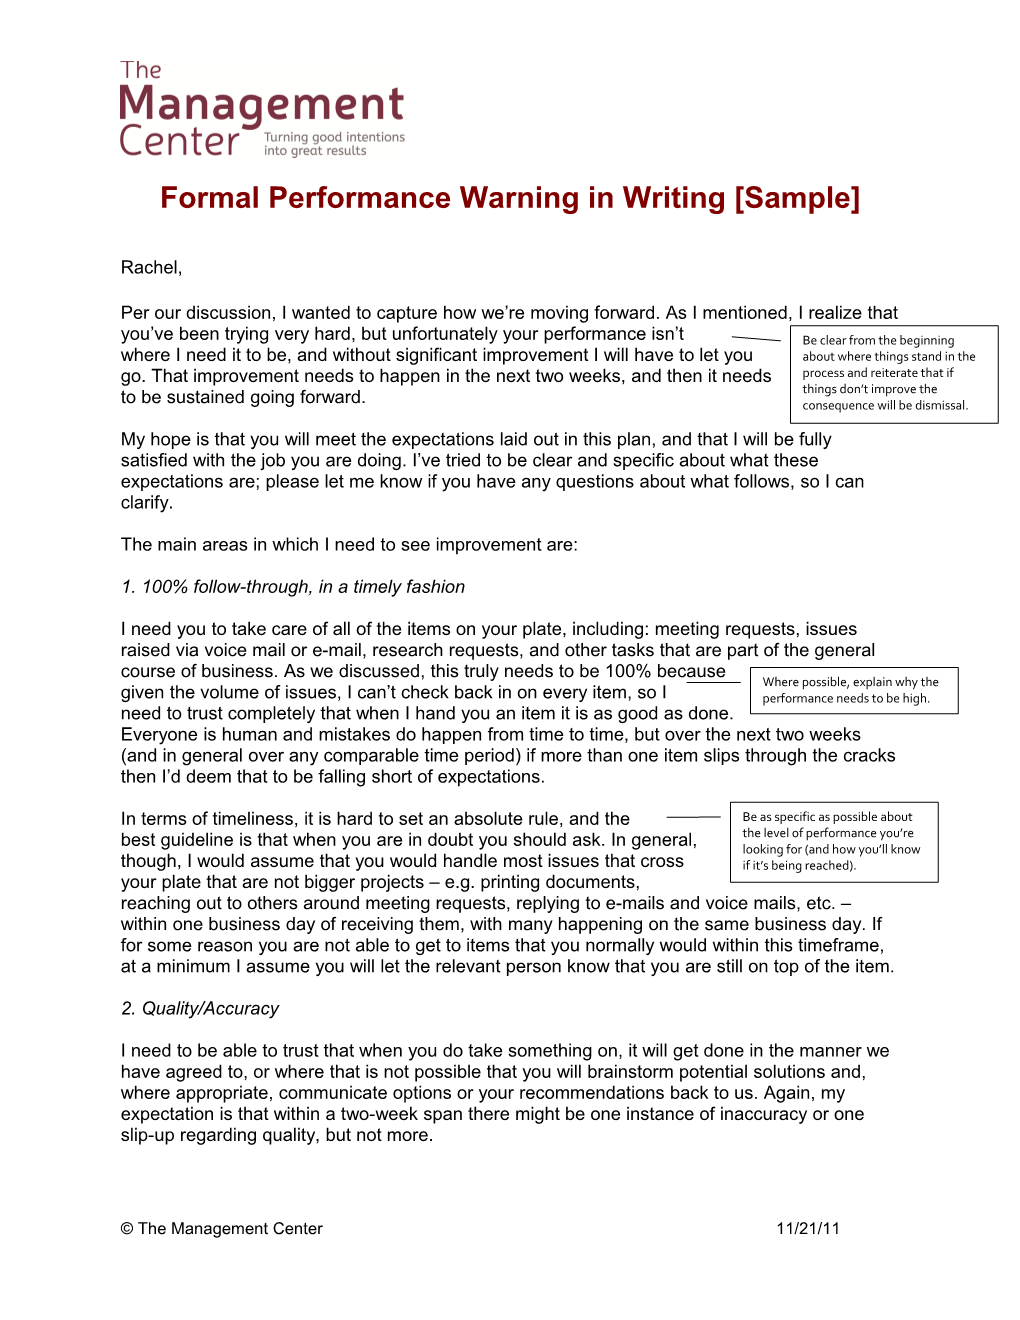 Formal Performance Warning in Writing Sample